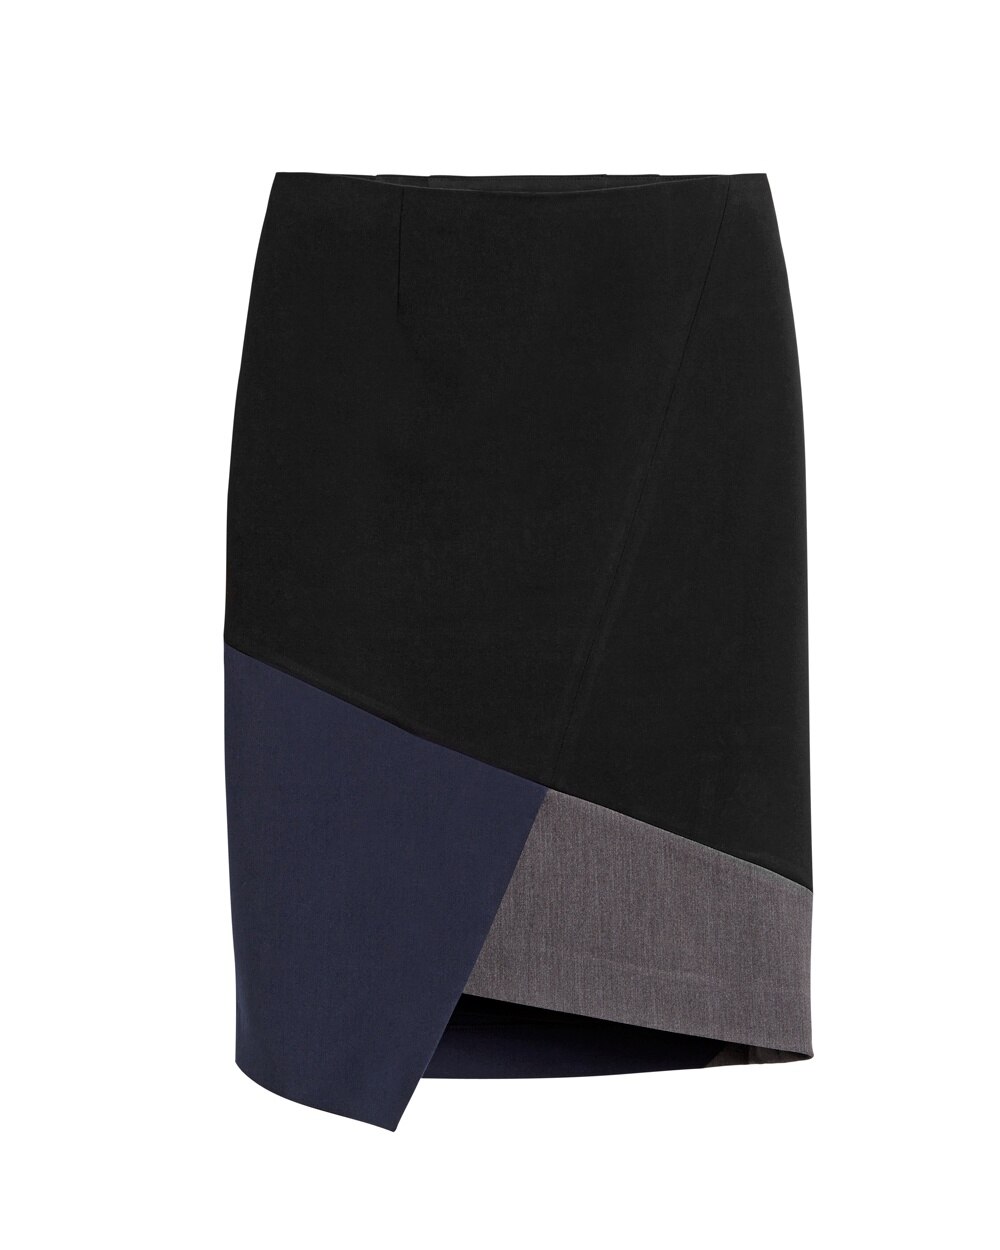 Colorblock Pencil Skirt - Shop Women's New Arrivals Collection - New ...